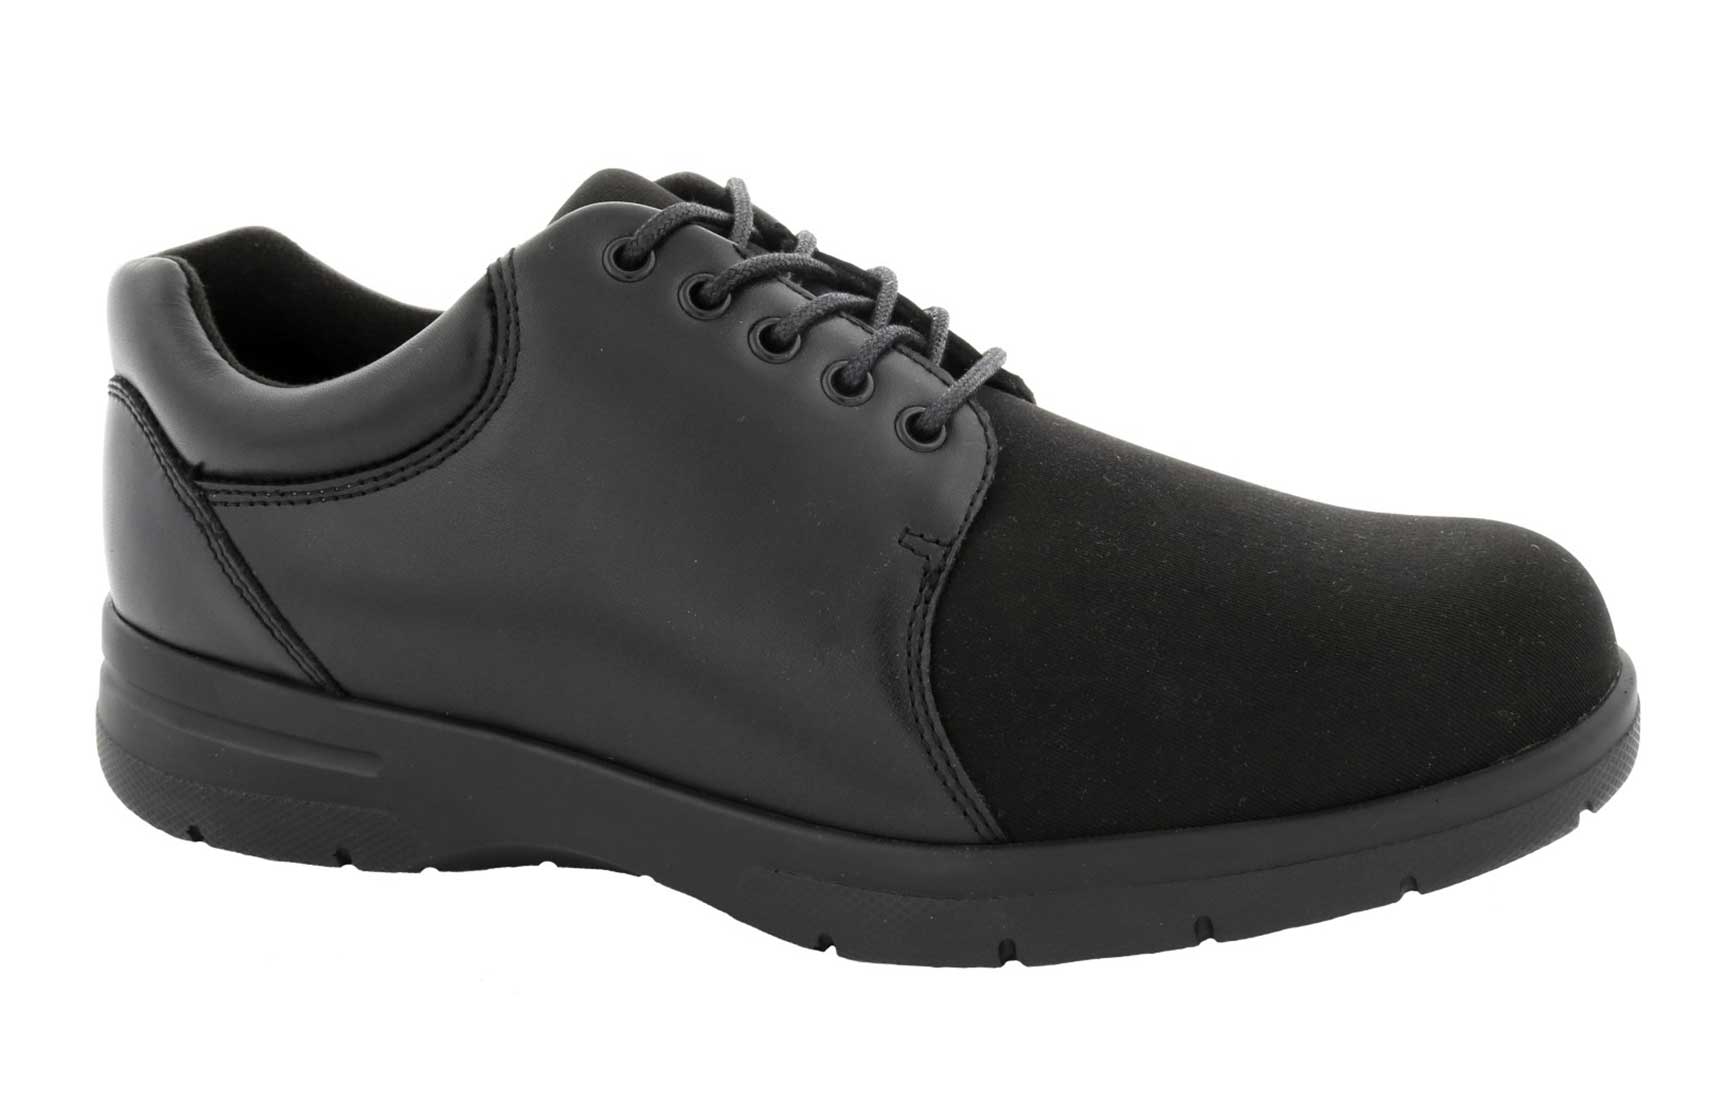 Drew Shoes Drifter 40204 - Men's Casual Comfort Therapeutic Shoe